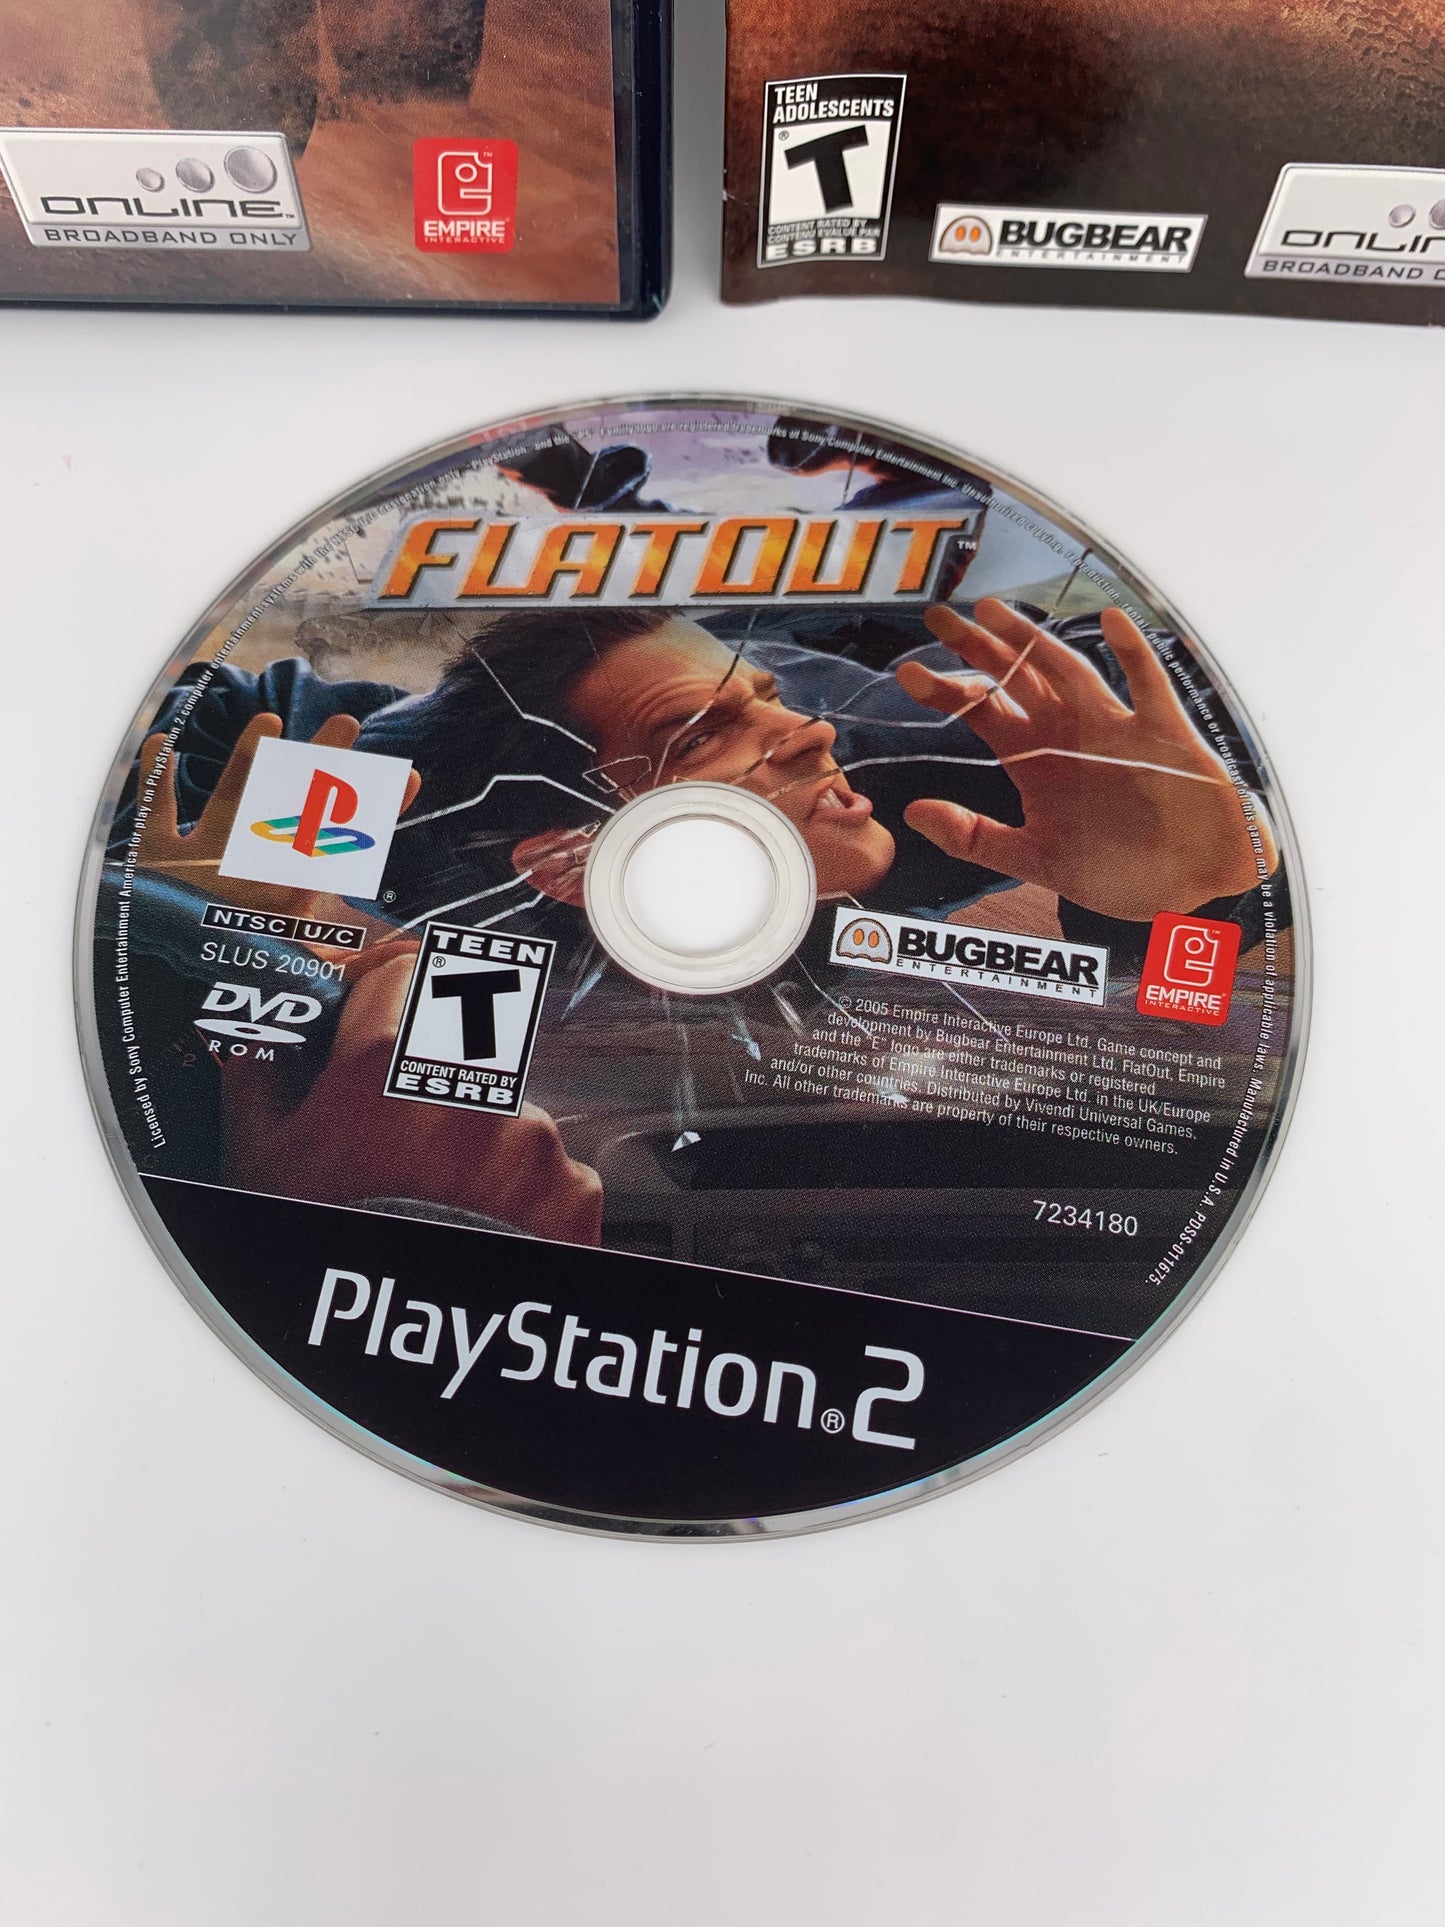 SONY PLAYSTATiON 2 [PS2] | FLATOUT